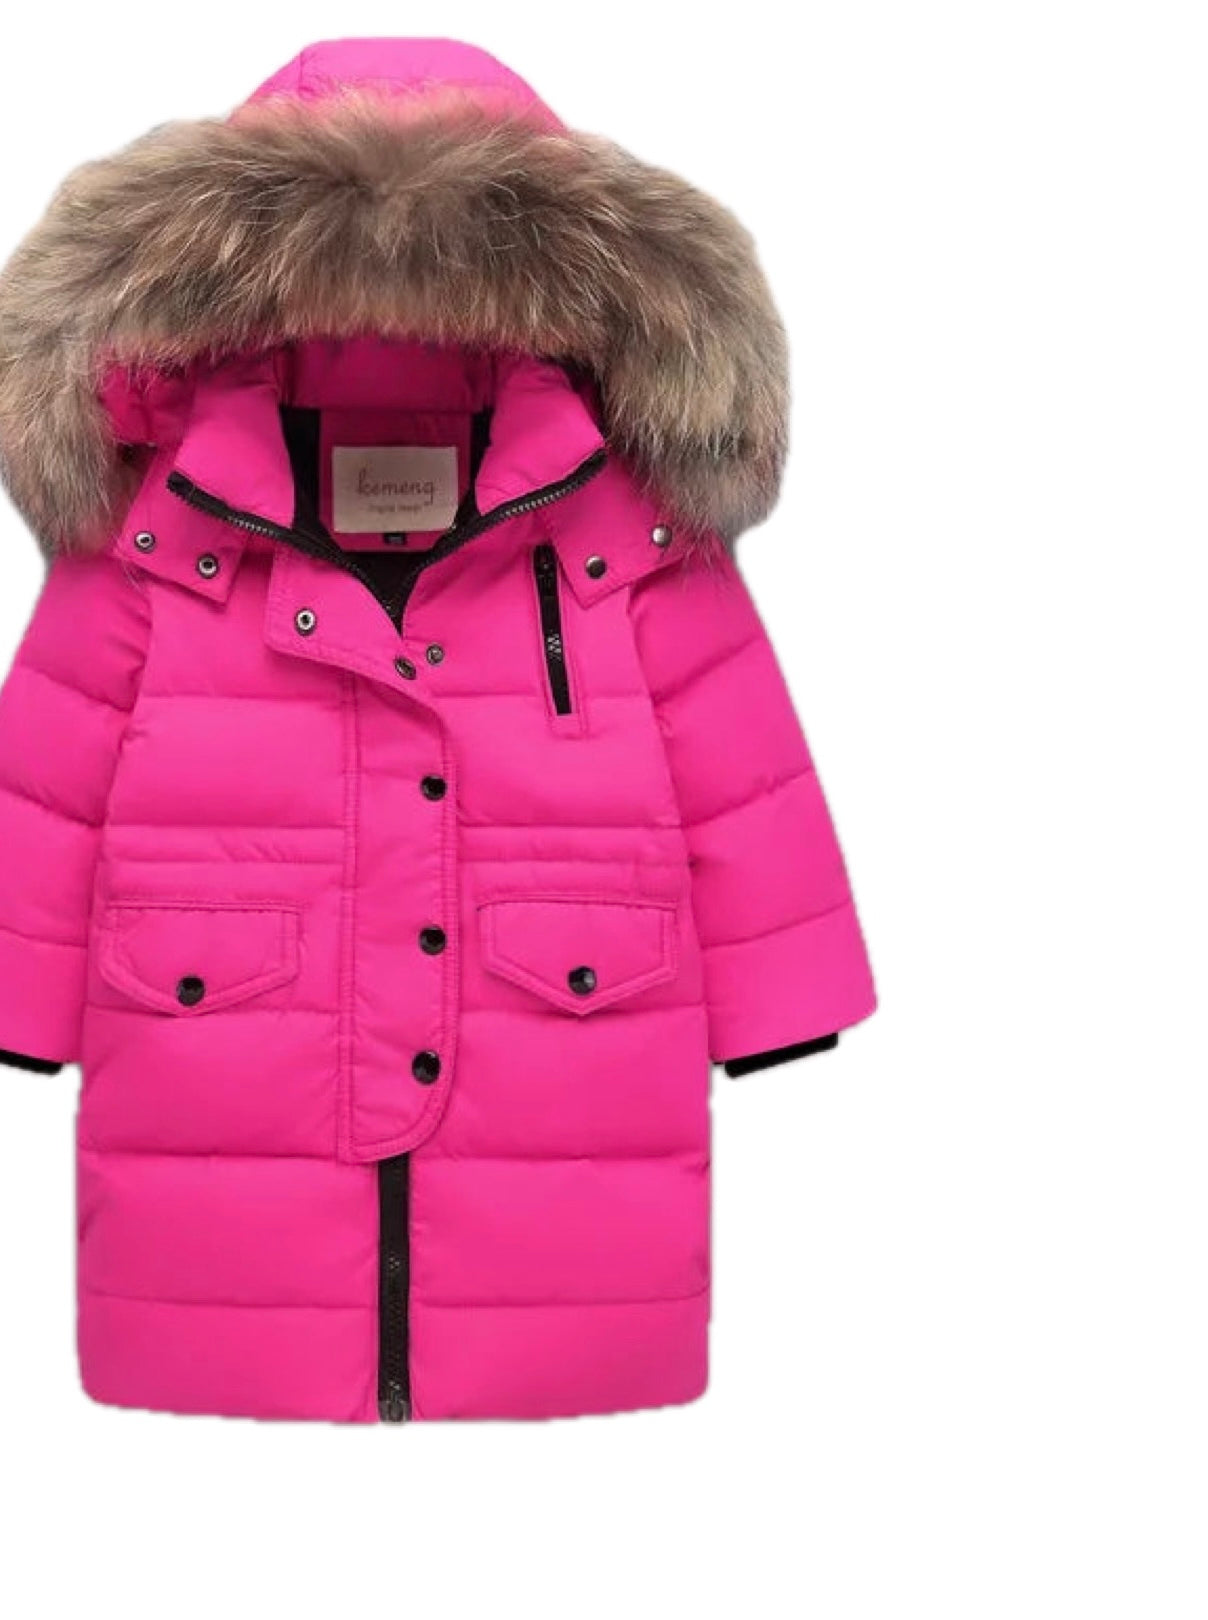 Girls Pink Winter Coat Faux Fur Hood